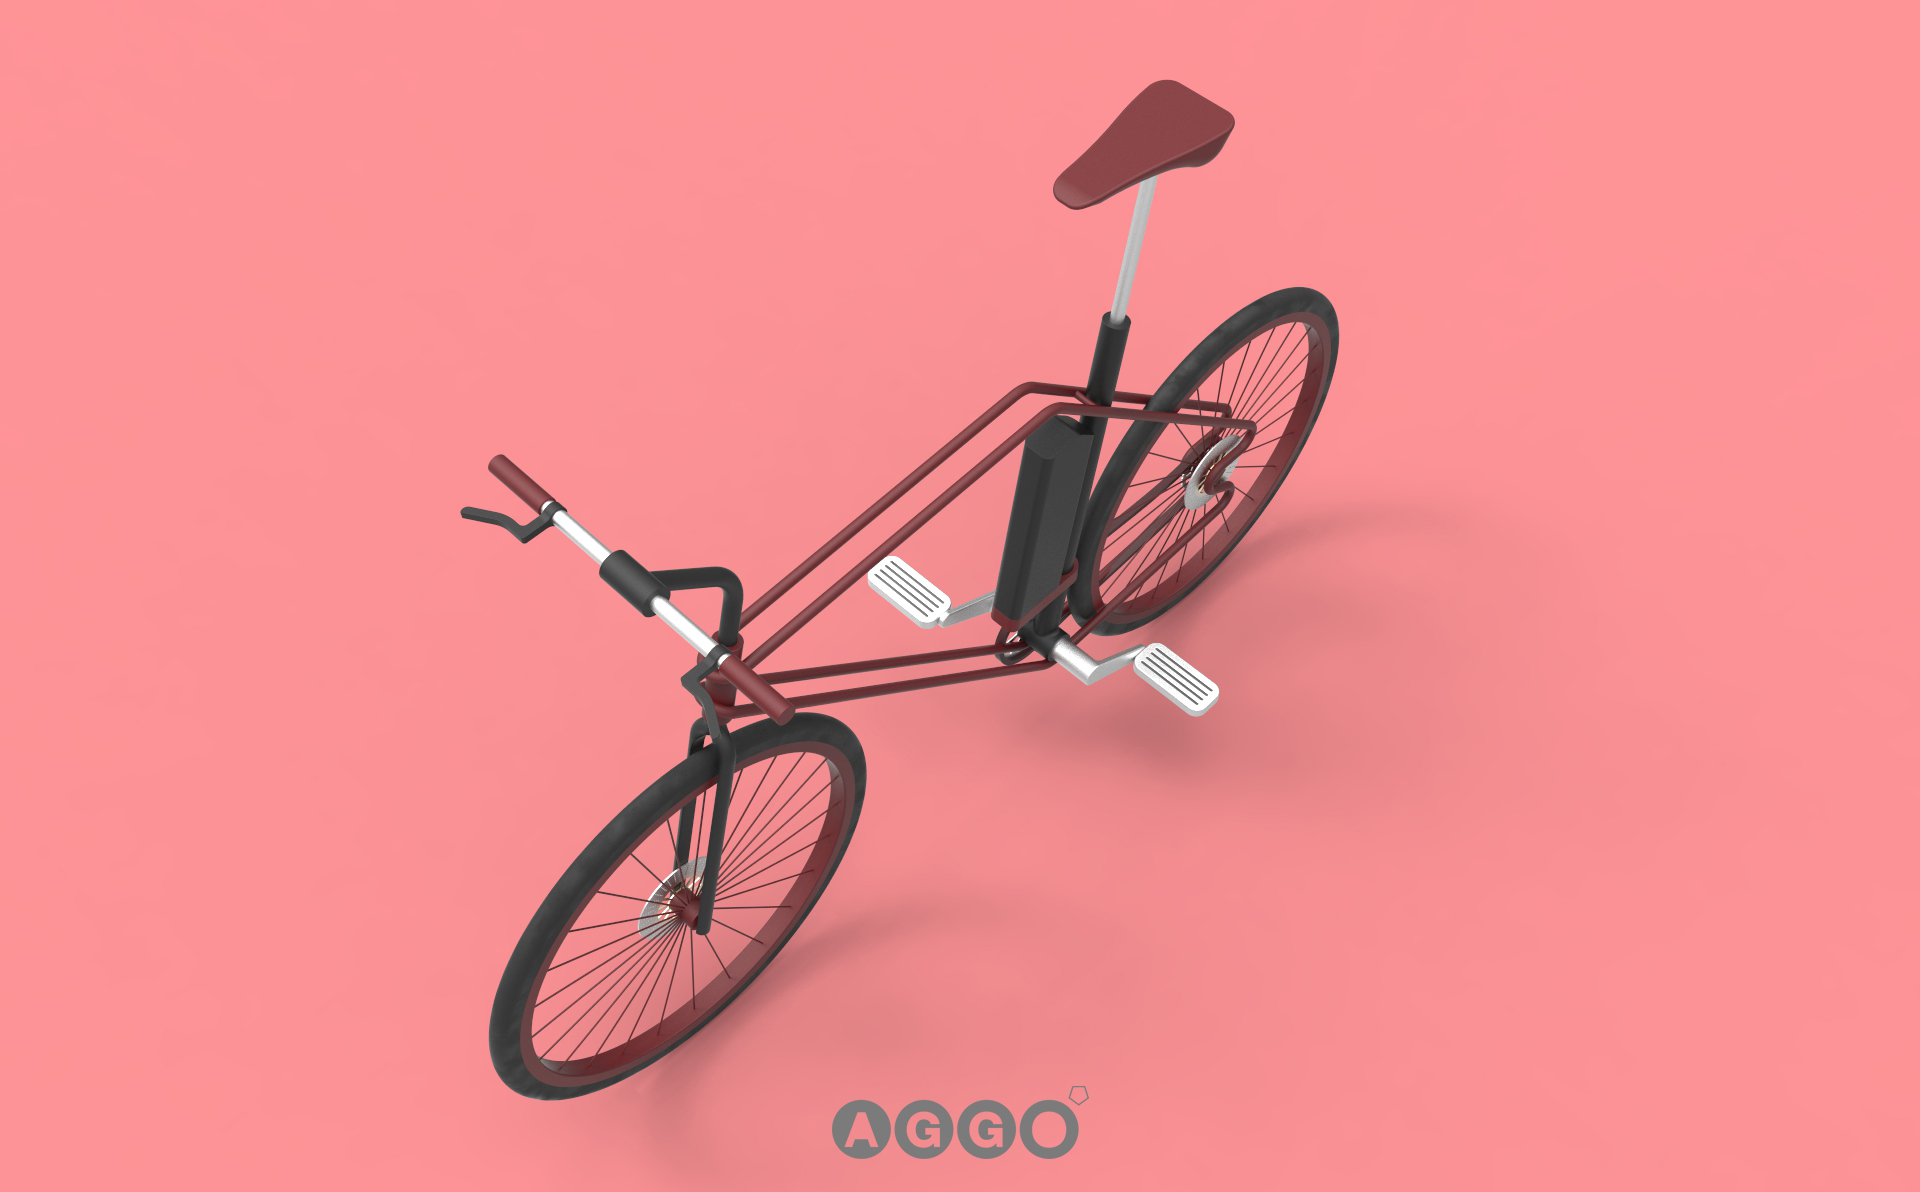 Electric_Bicycle_by_Aggo_008.jpg